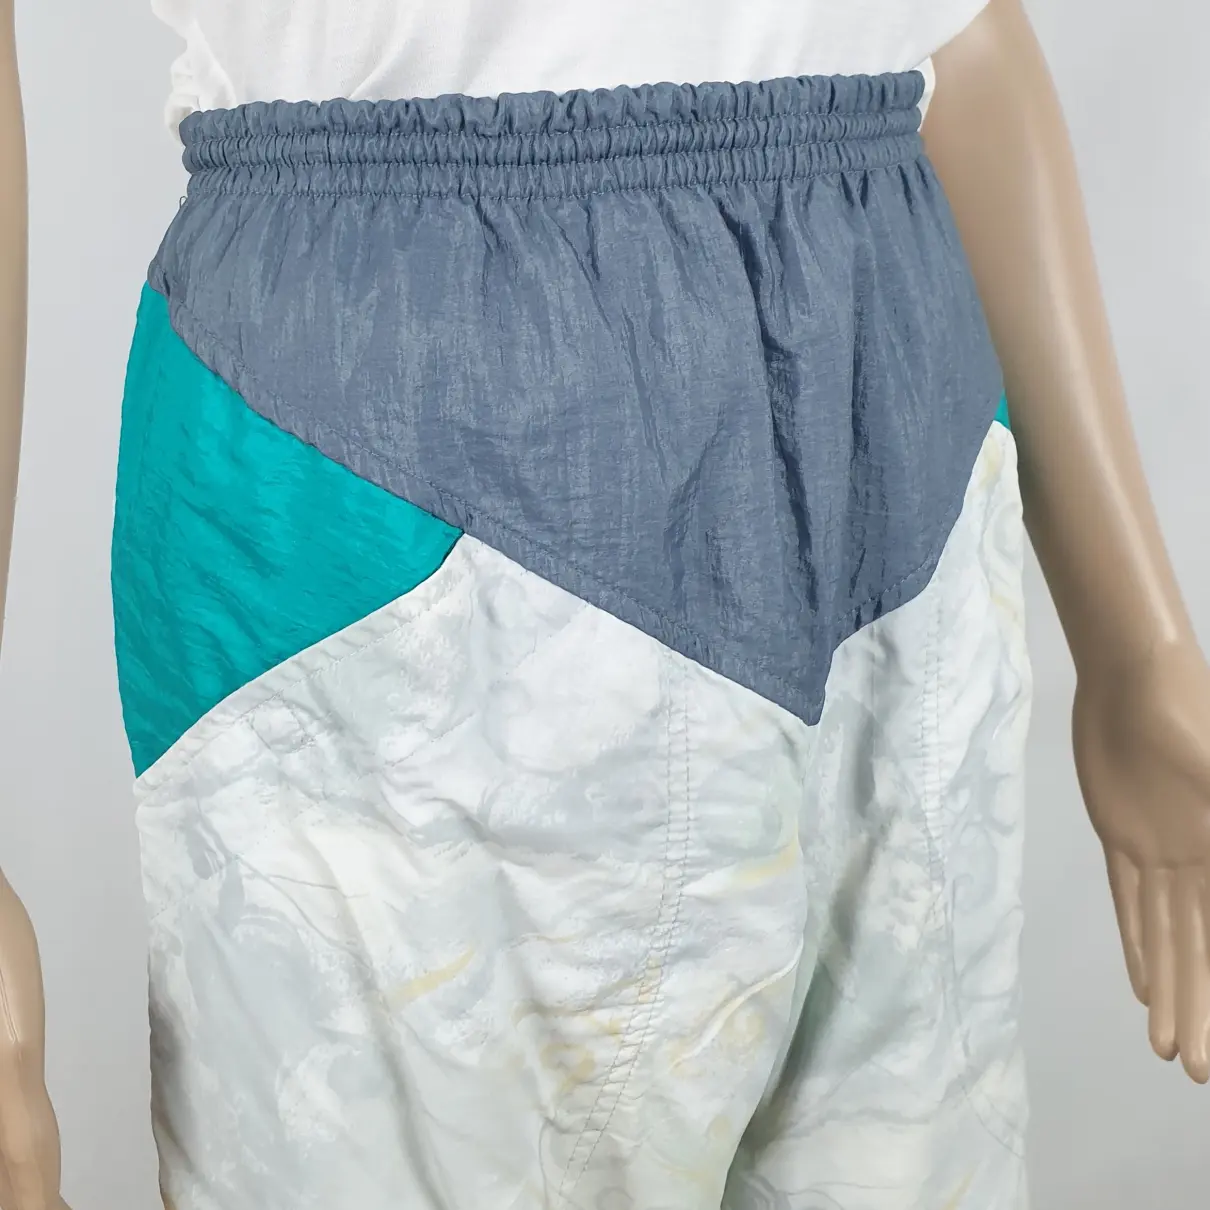 Buy Alpina Large pants online